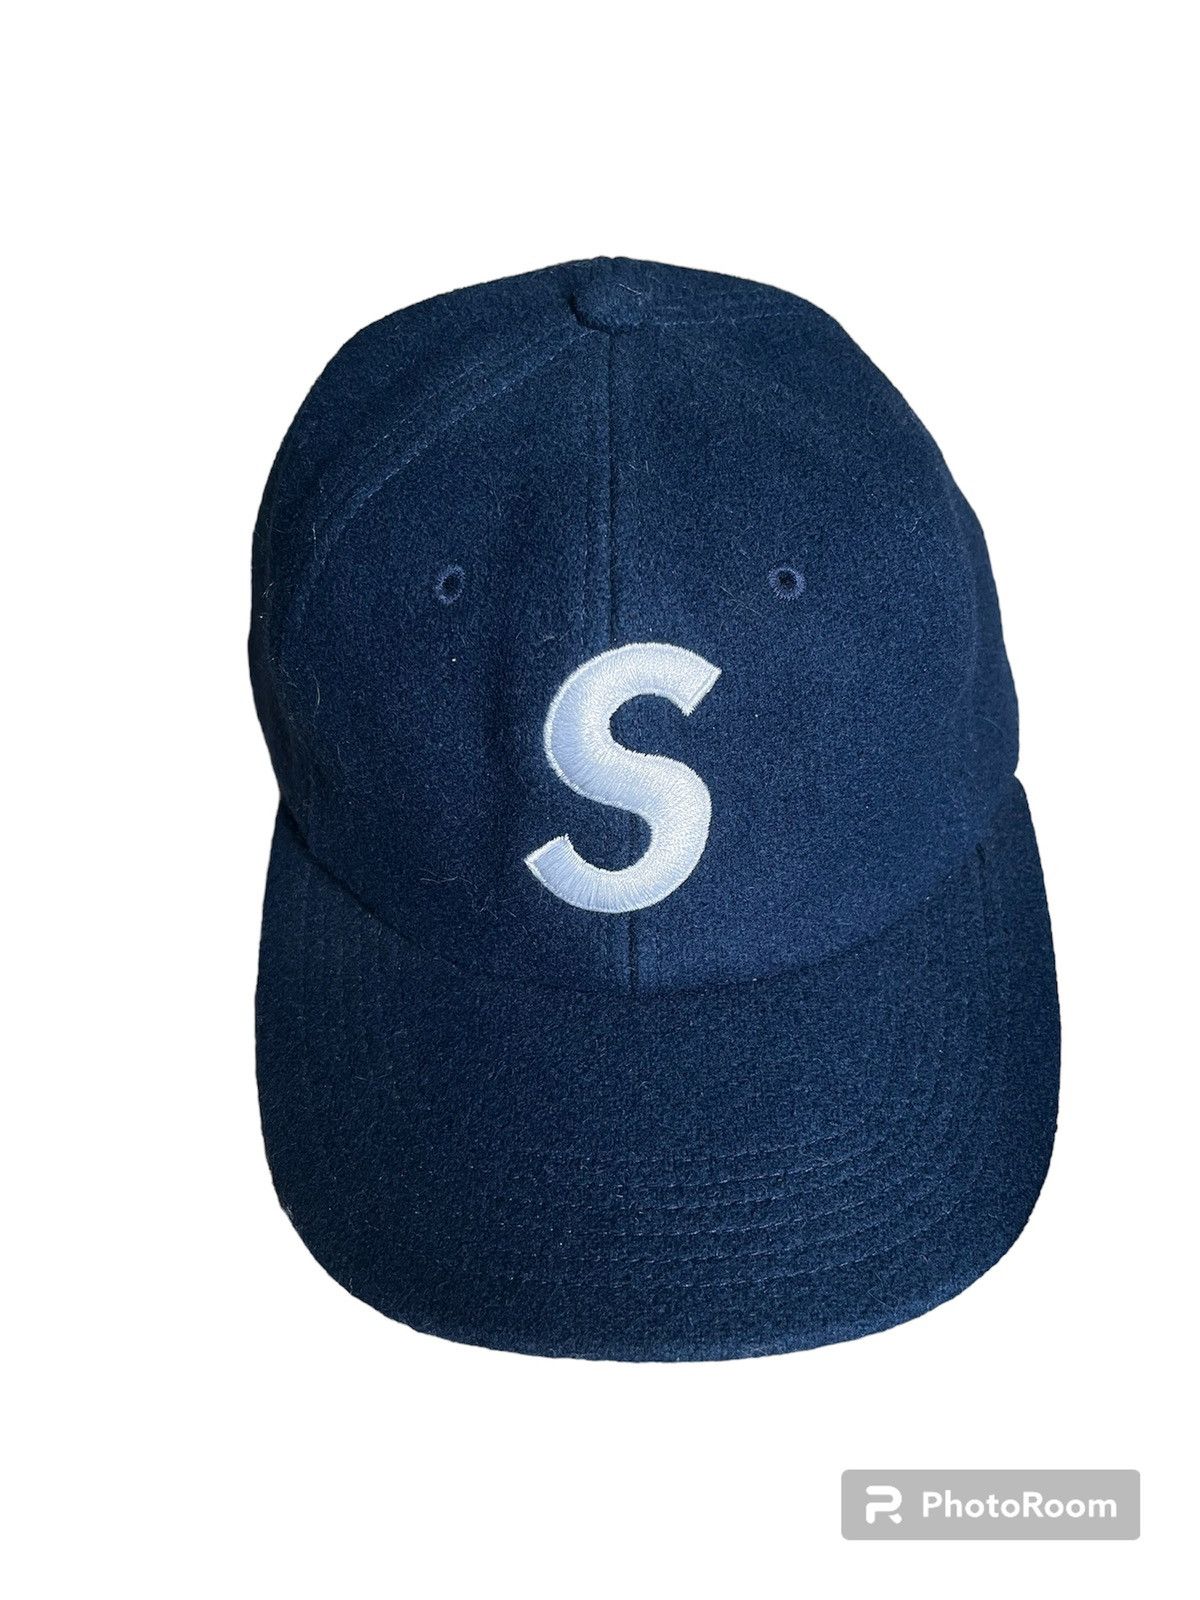 Supreme Supreme “S” logo wool hat | Grailed